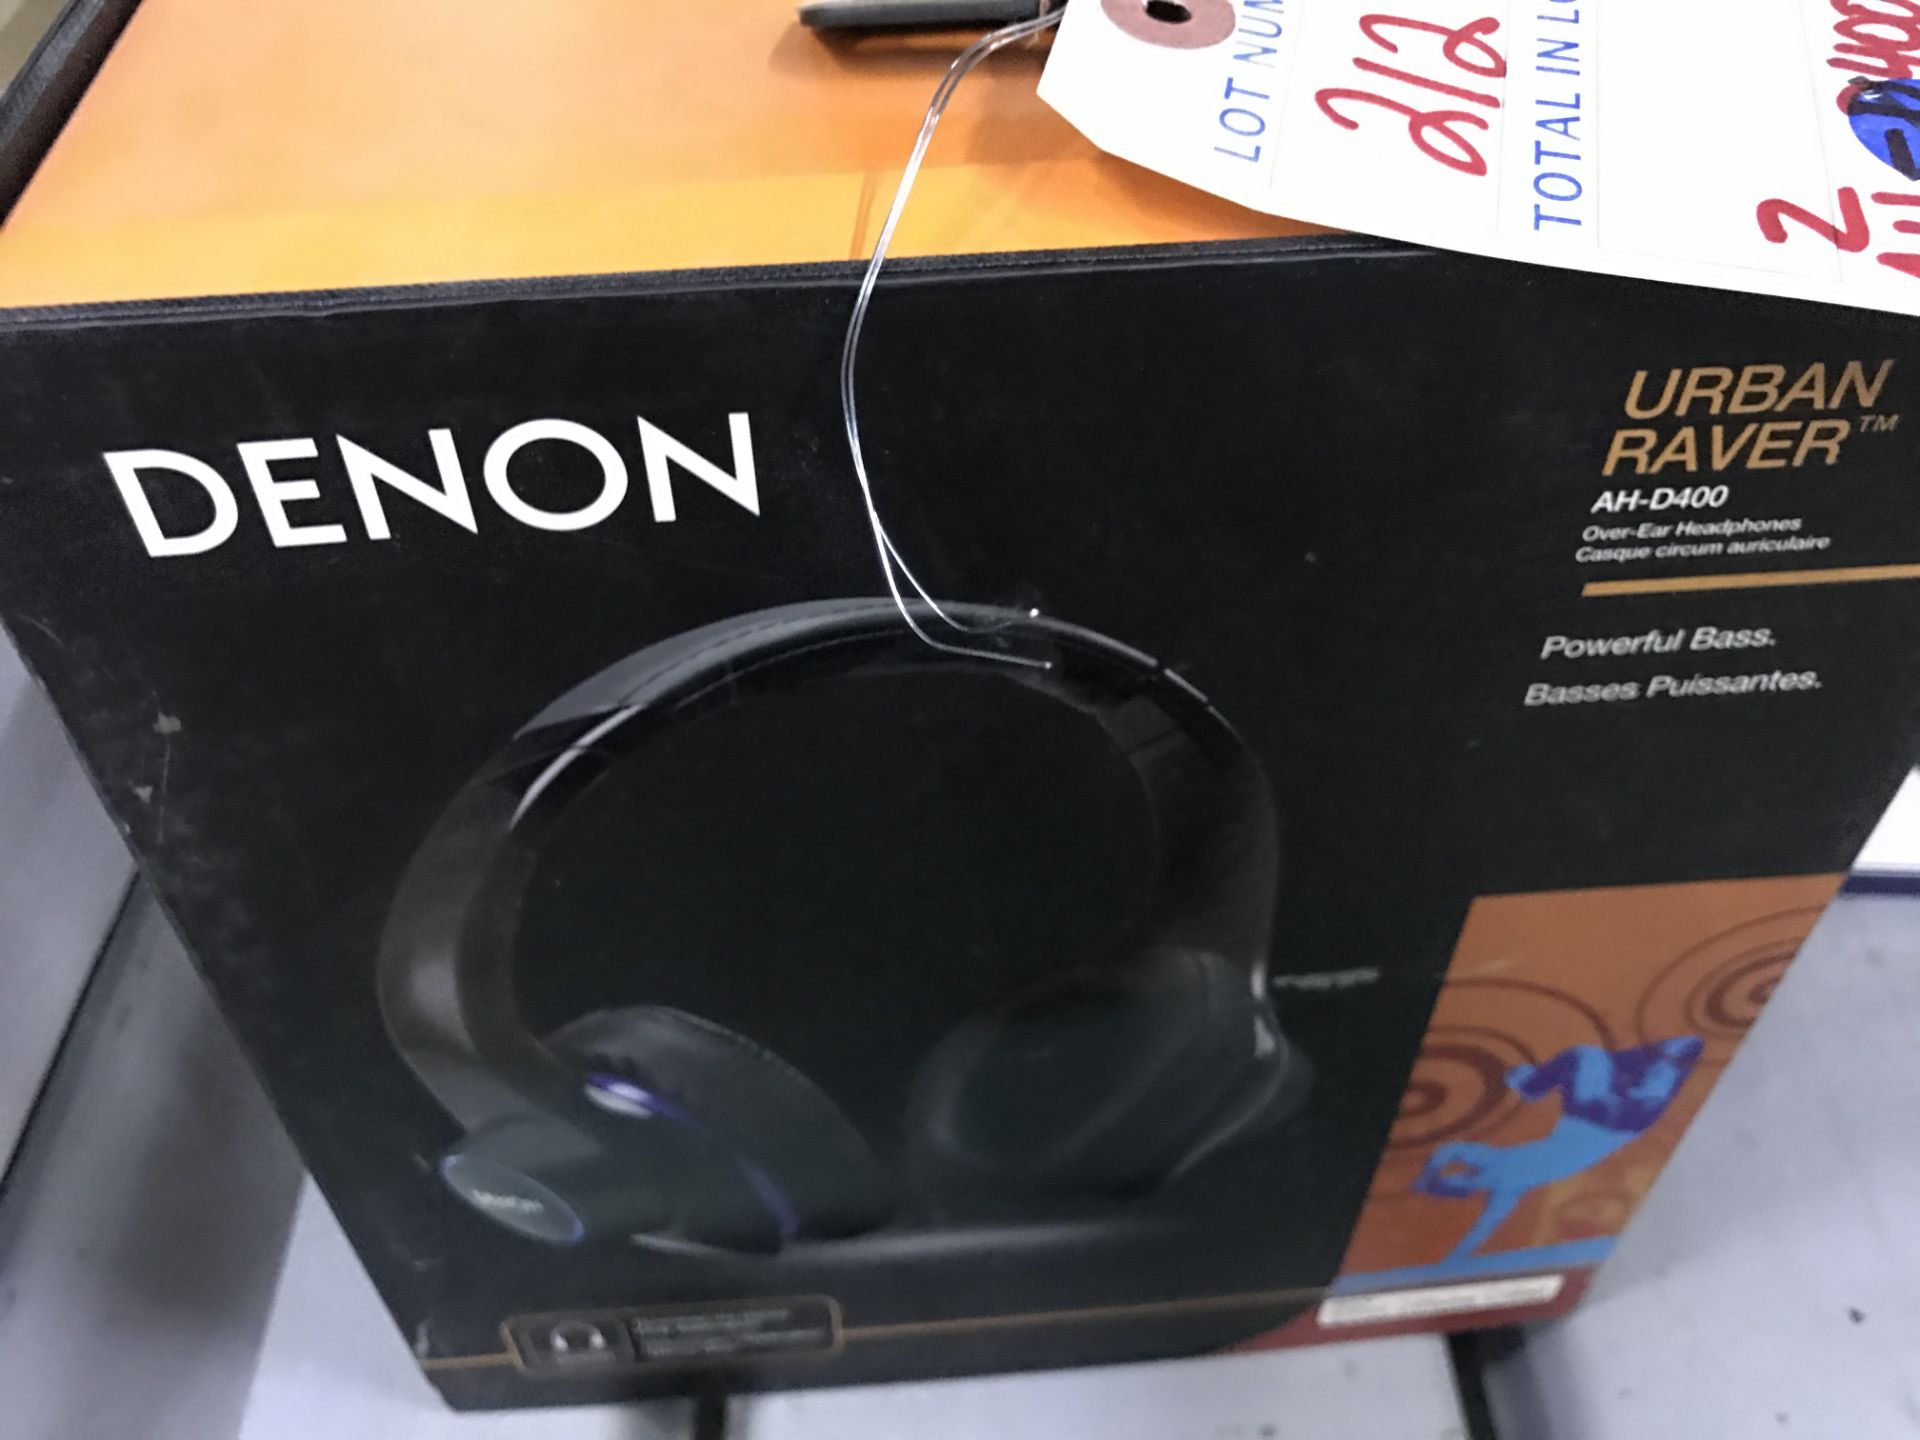 (2) Denon #AH-D400 Headphones (Over Ear) - Image 2 of 2